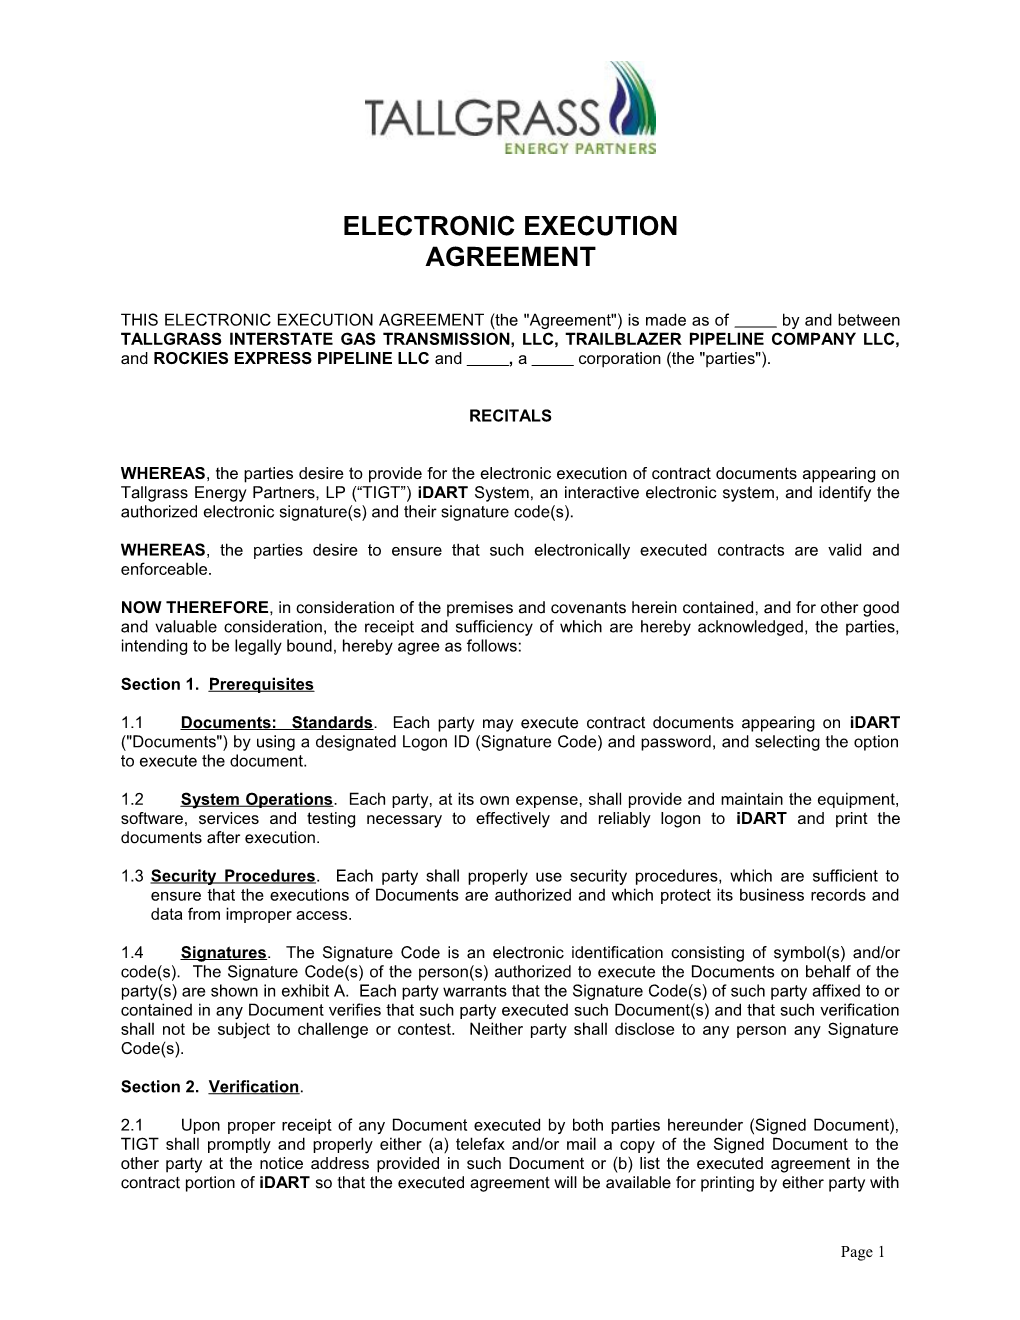 Electronic Execution